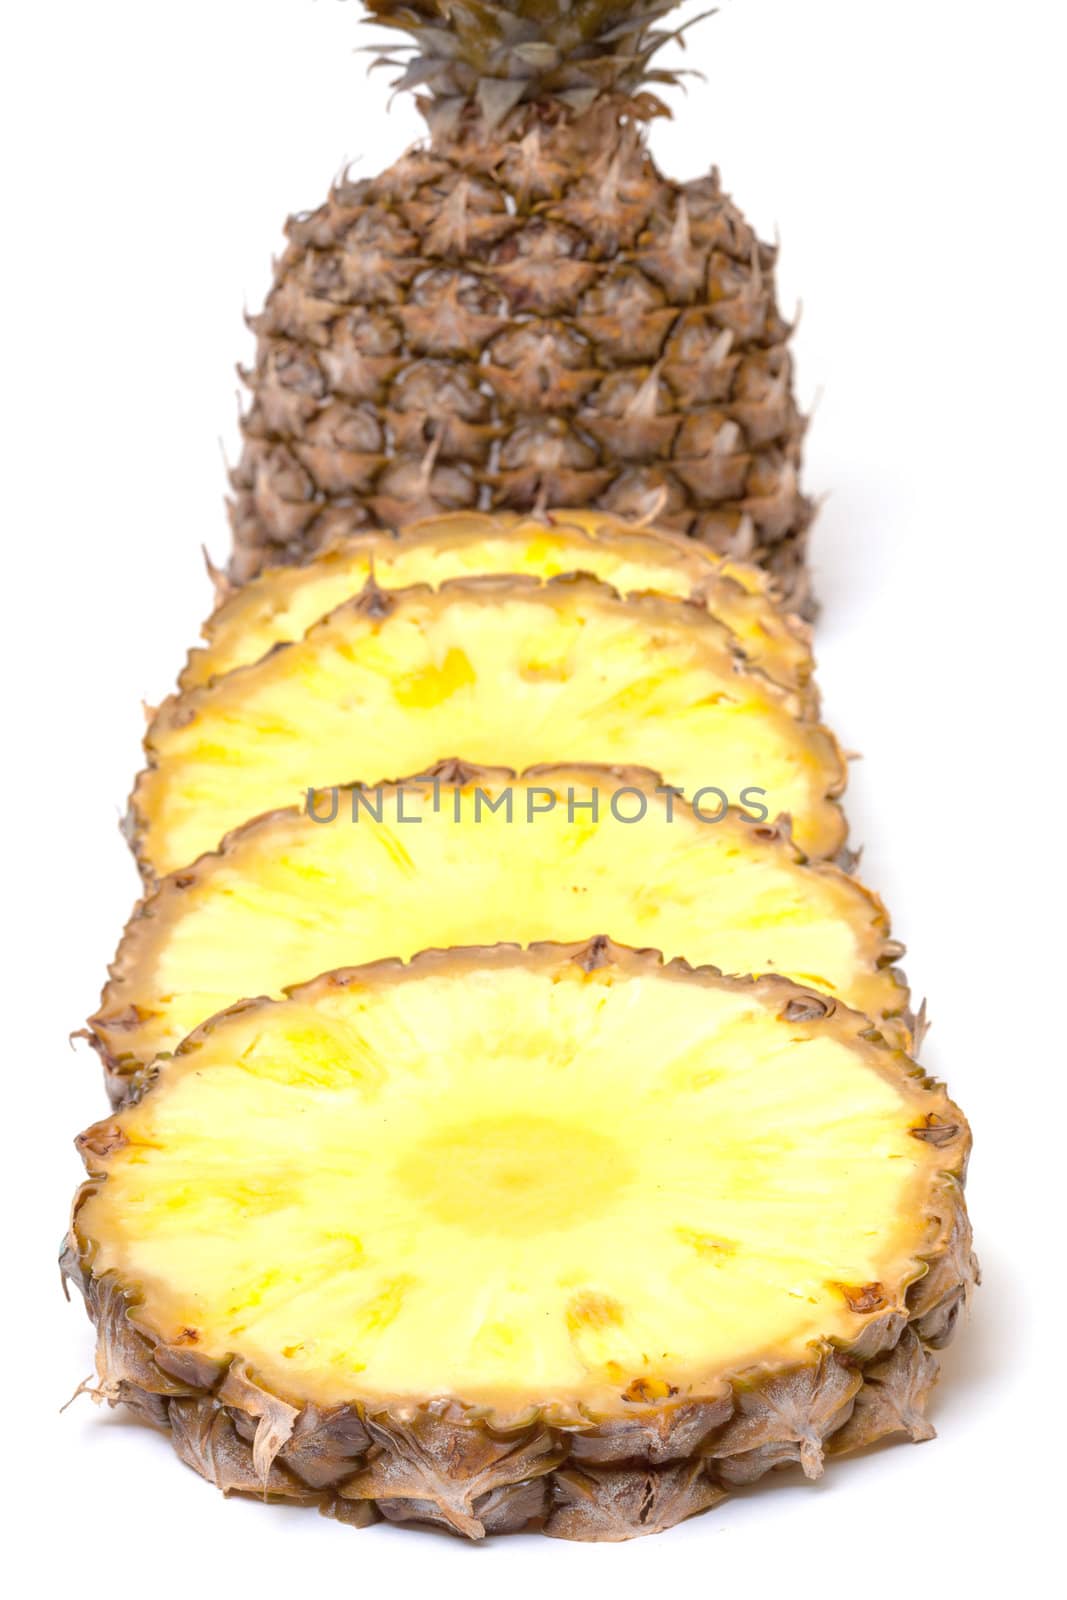 Slice Ripe Pineapple Fruit,  closeup on white background